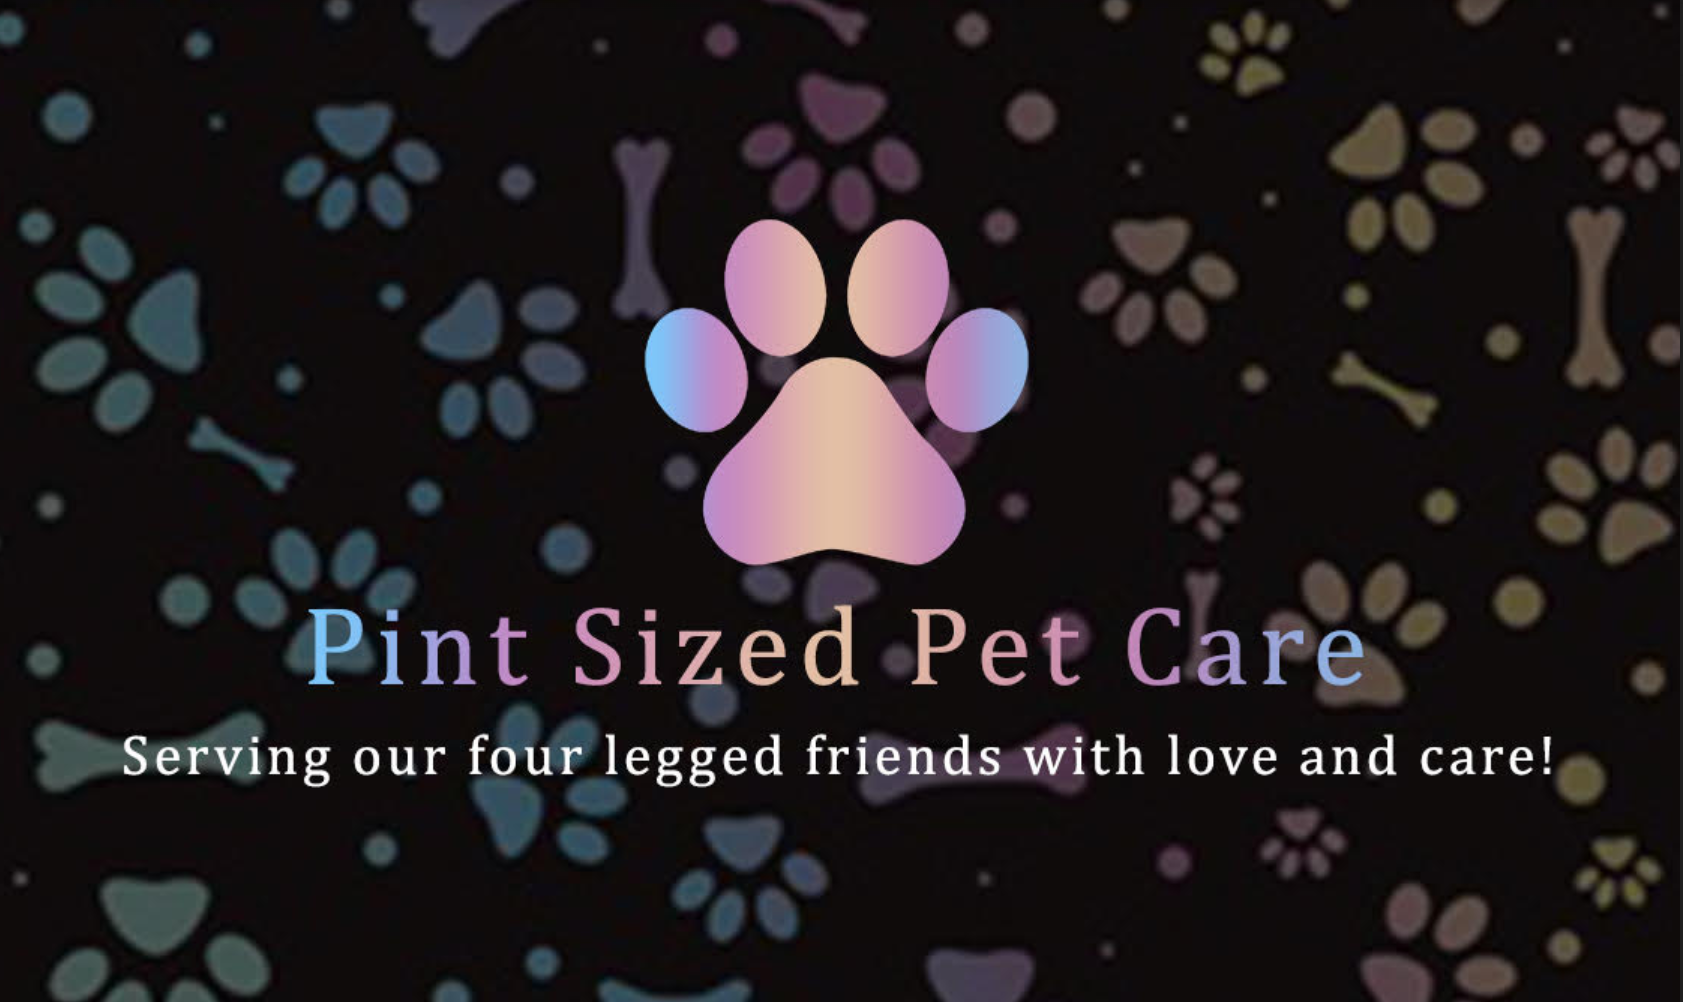 Pint Sized Pet Care, LLC